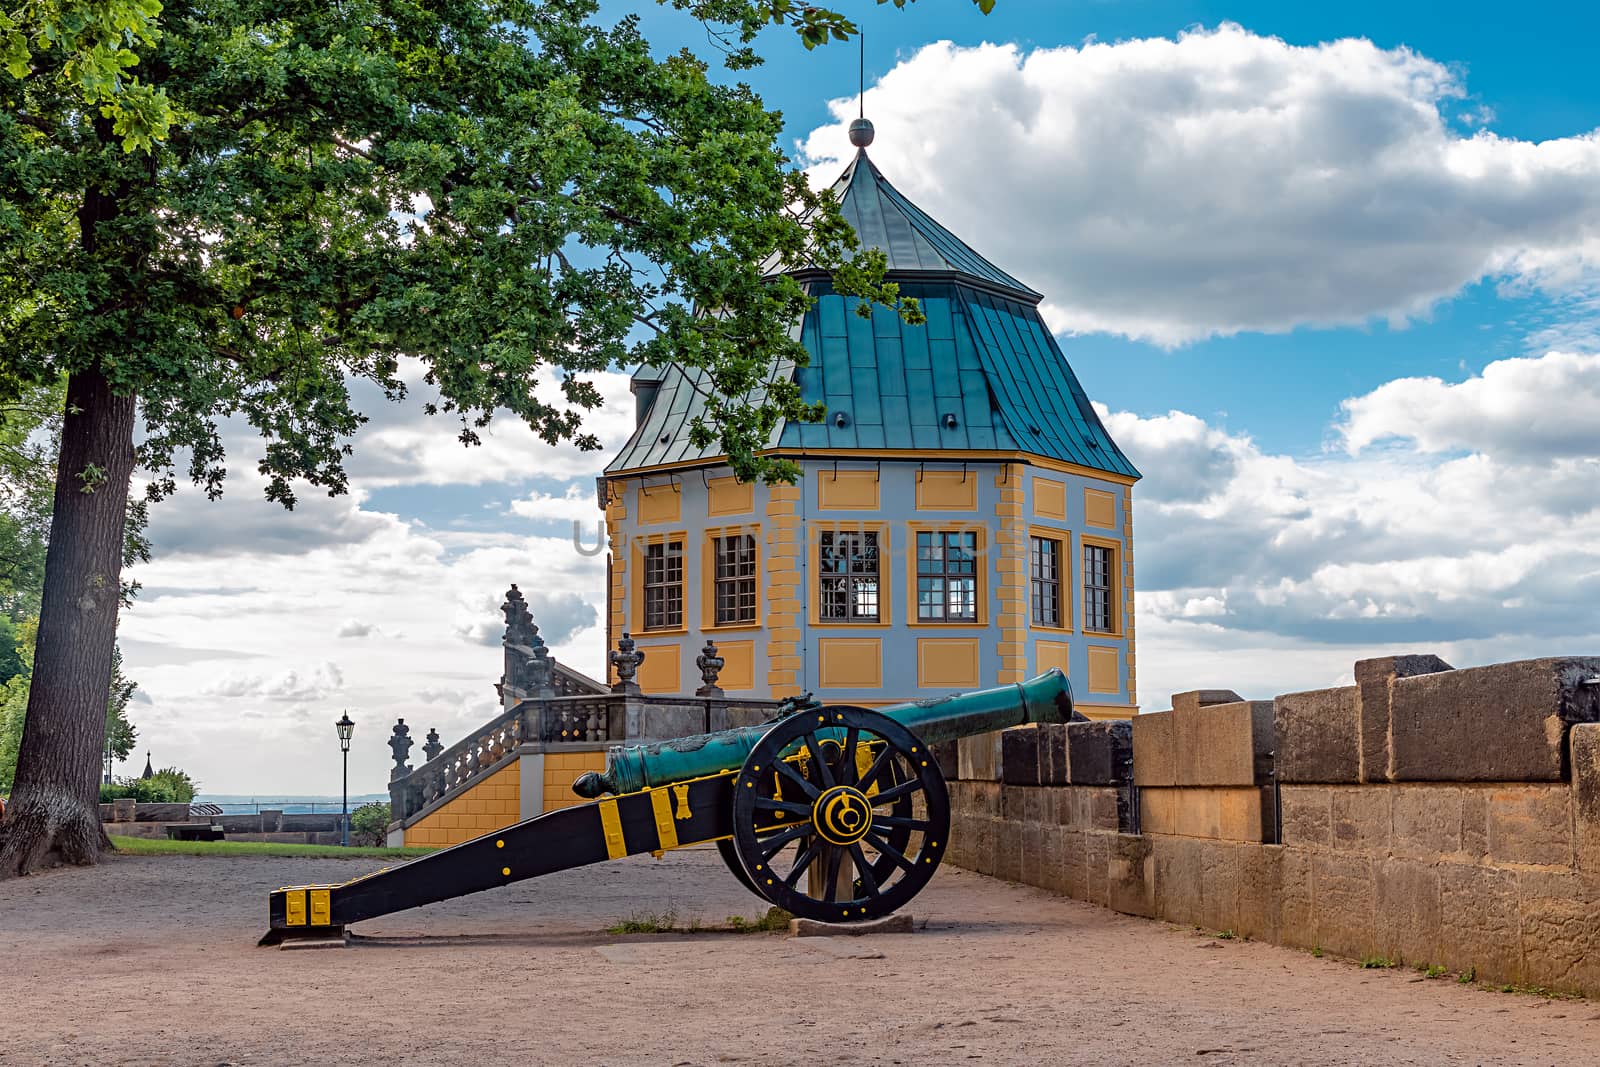 Cannon in front of Friedrichsburg on Koenigstein Fortress, Germa by seka33